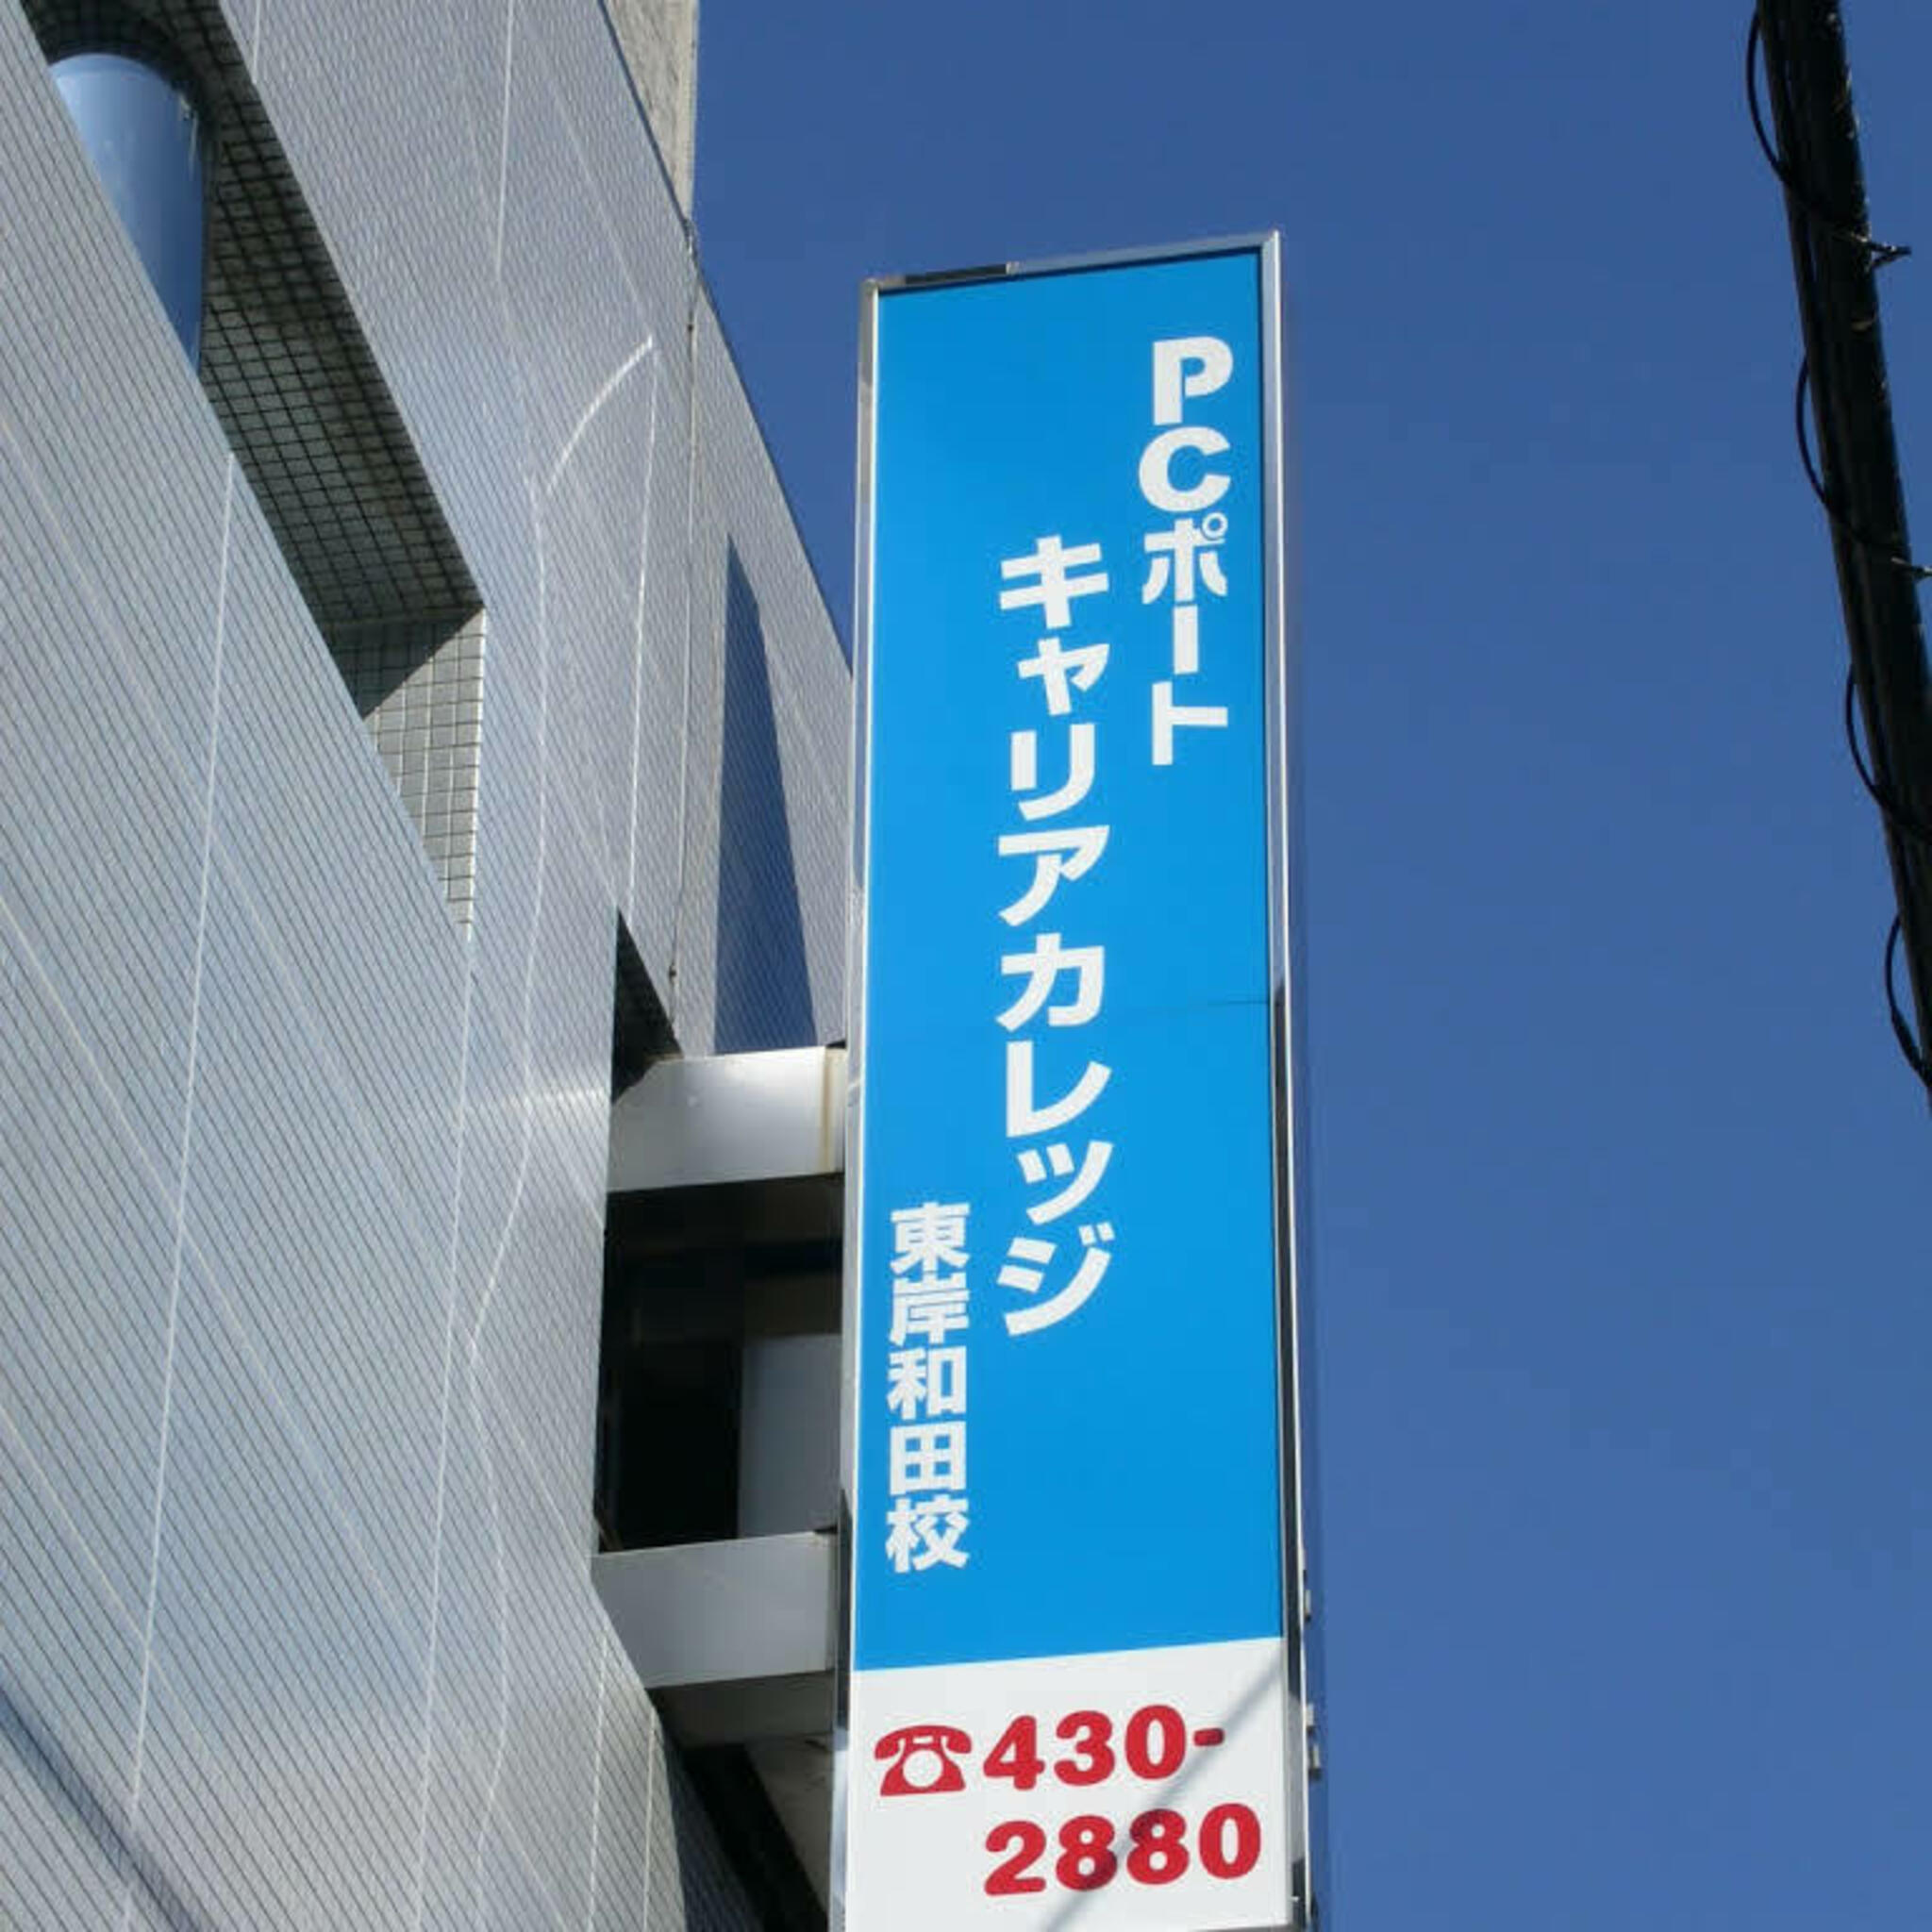 PCポートキャリアカレッジ東岸和田駅前校の代表写真8